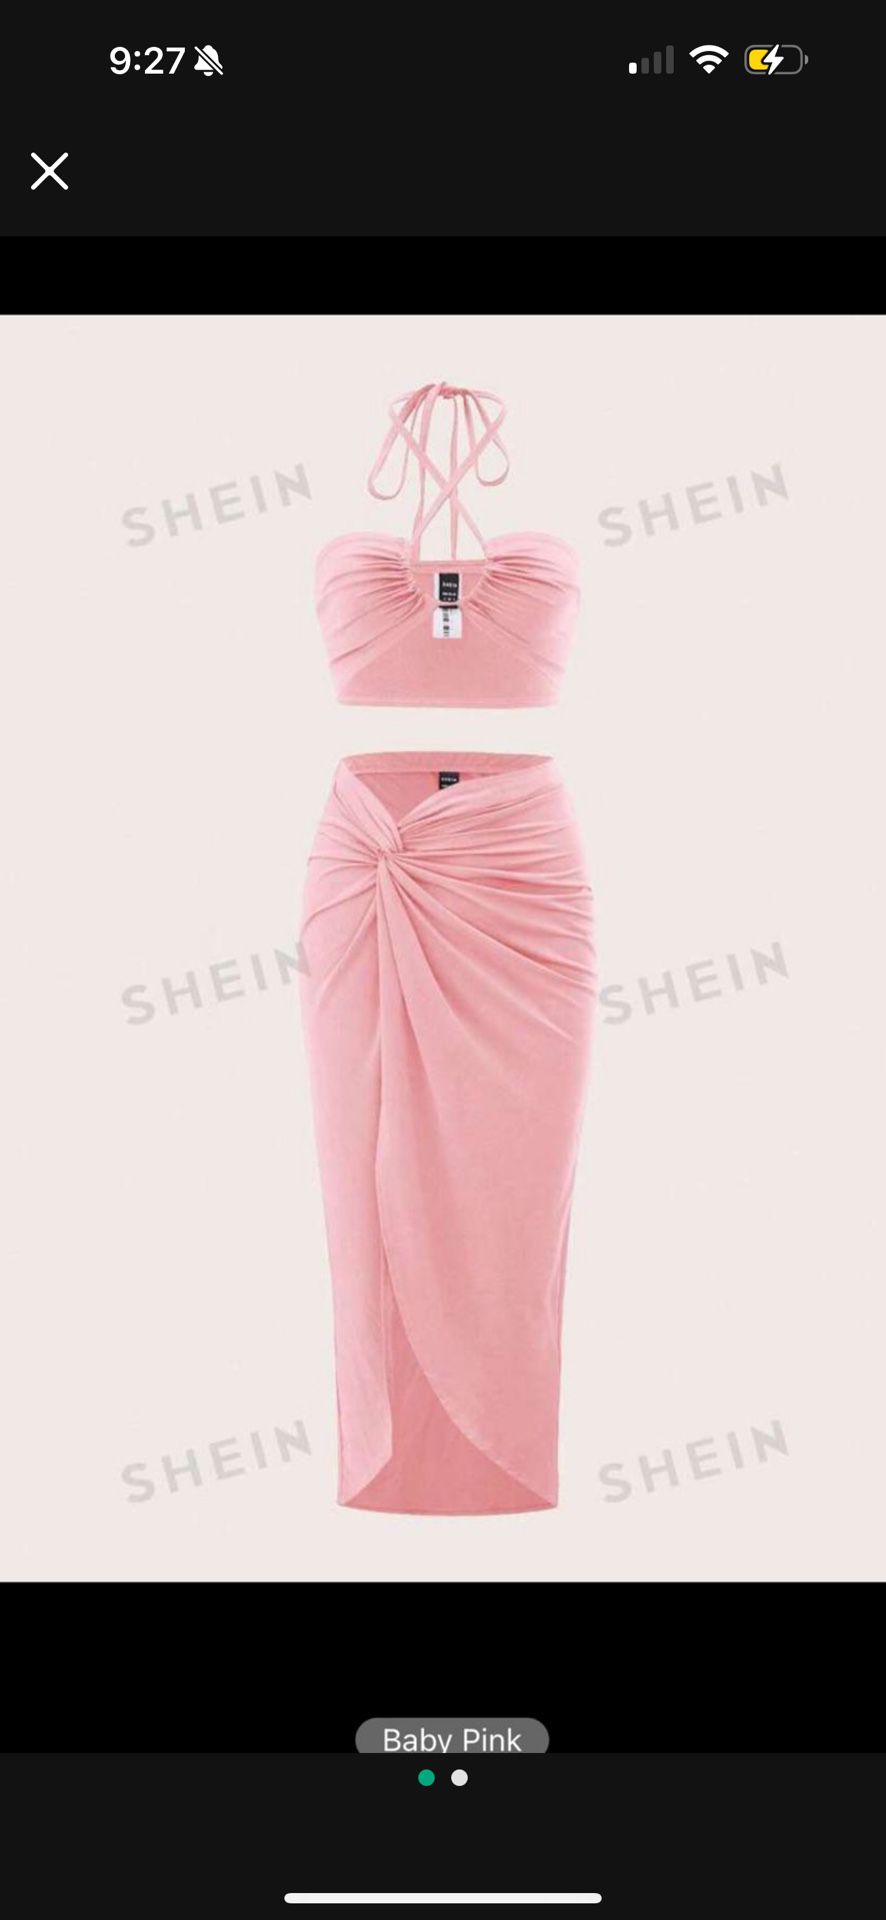 NEW - Pink Dress Set - Small